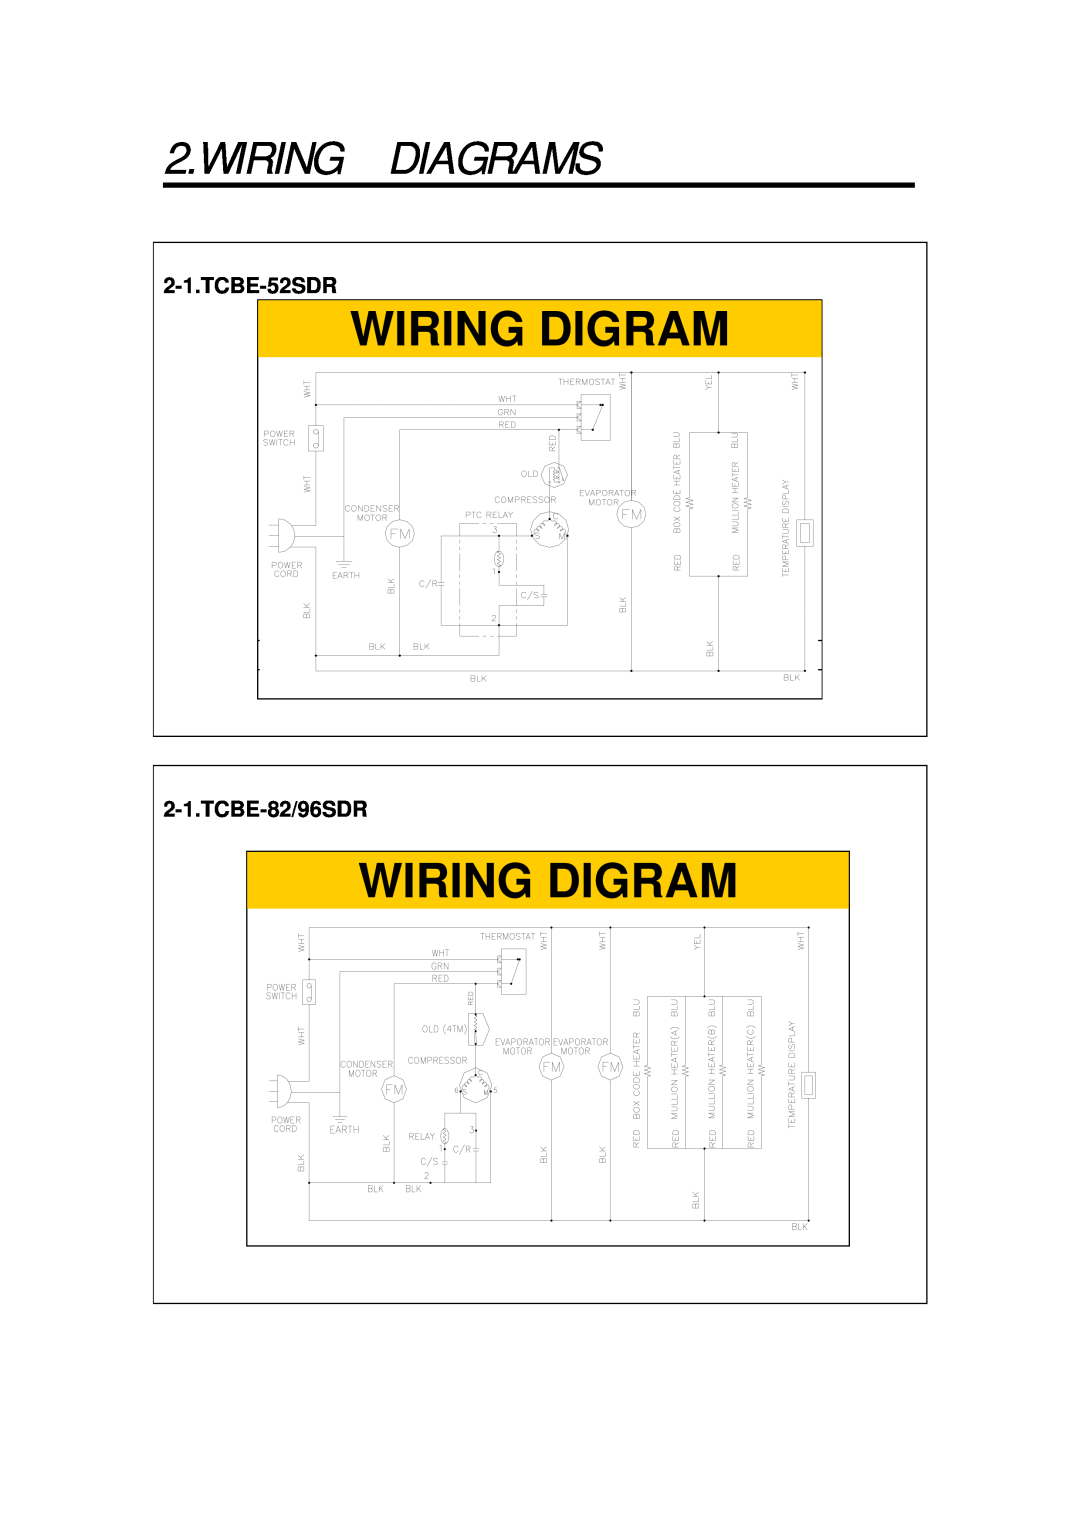 Turbo Air TCBE-82SDR, TCBE-96SDR manual Wiring Diagrams, TCBE-52SDR, TCBE-82/96SDR, Wiring Digram 